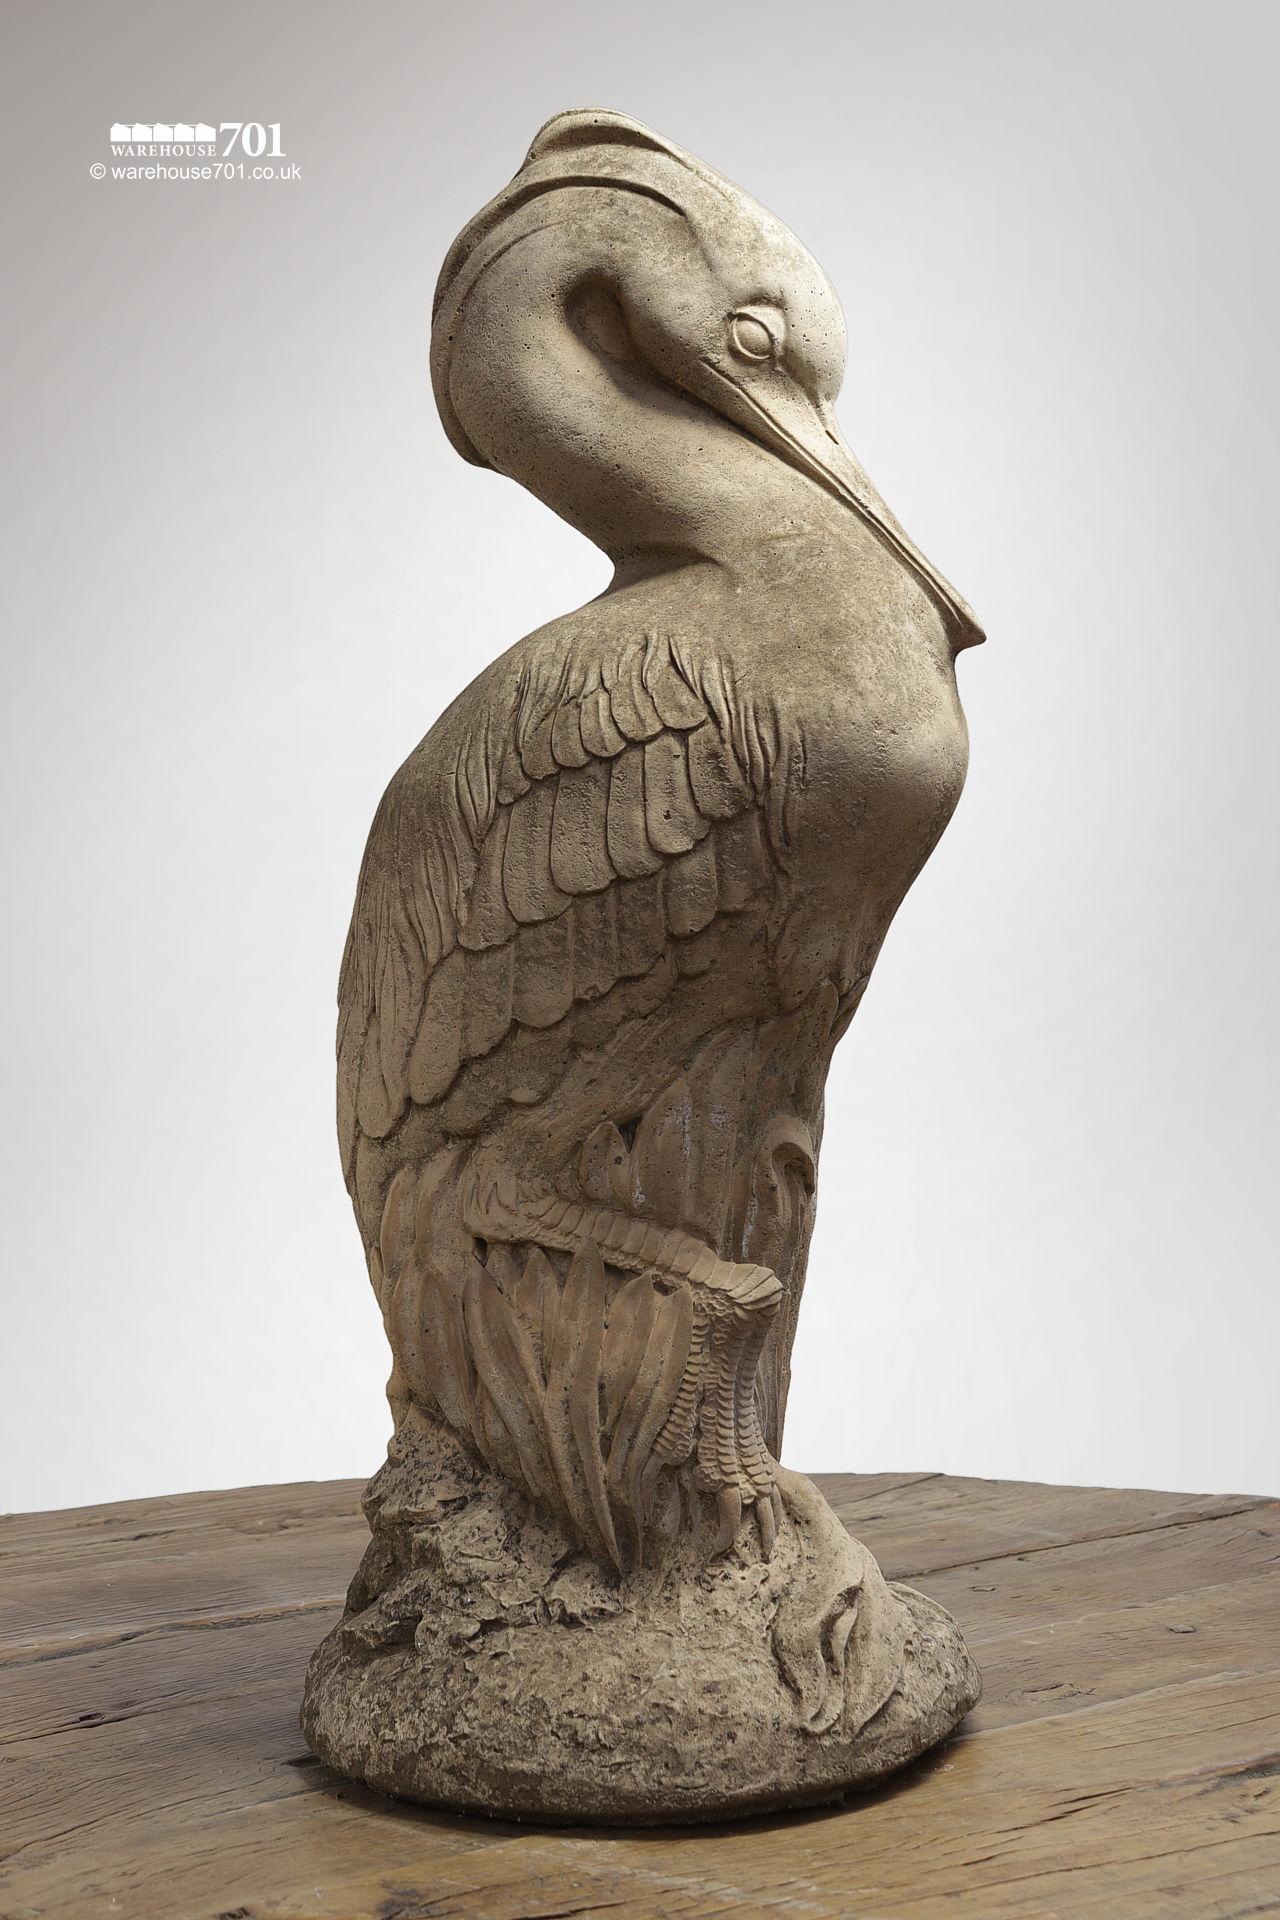 New Cast Stone Garden or Fishpond Bird Statue #4